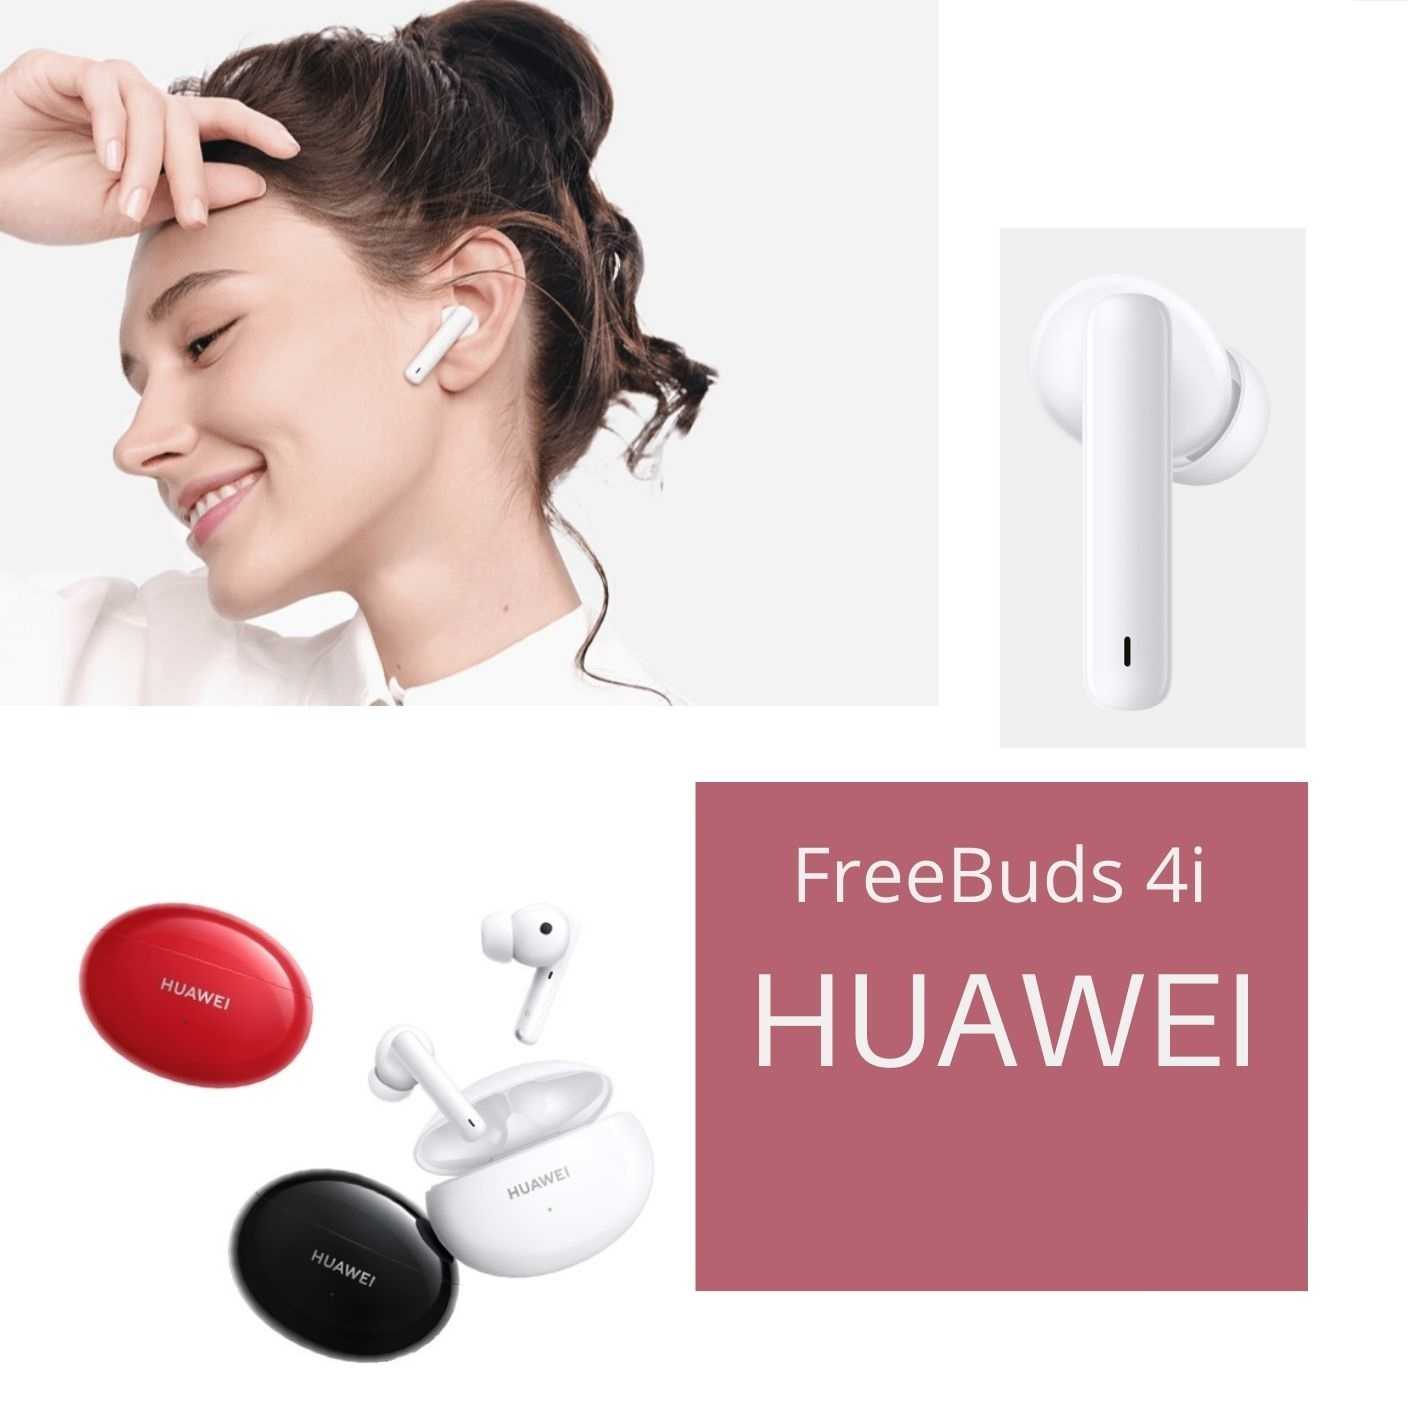 Huawei freebuds 4 купить. Хуавей фрибадс 4i. Huawei Buds 4i. Huawei freebuds 4i Ceramic. Huawei Buds 4.